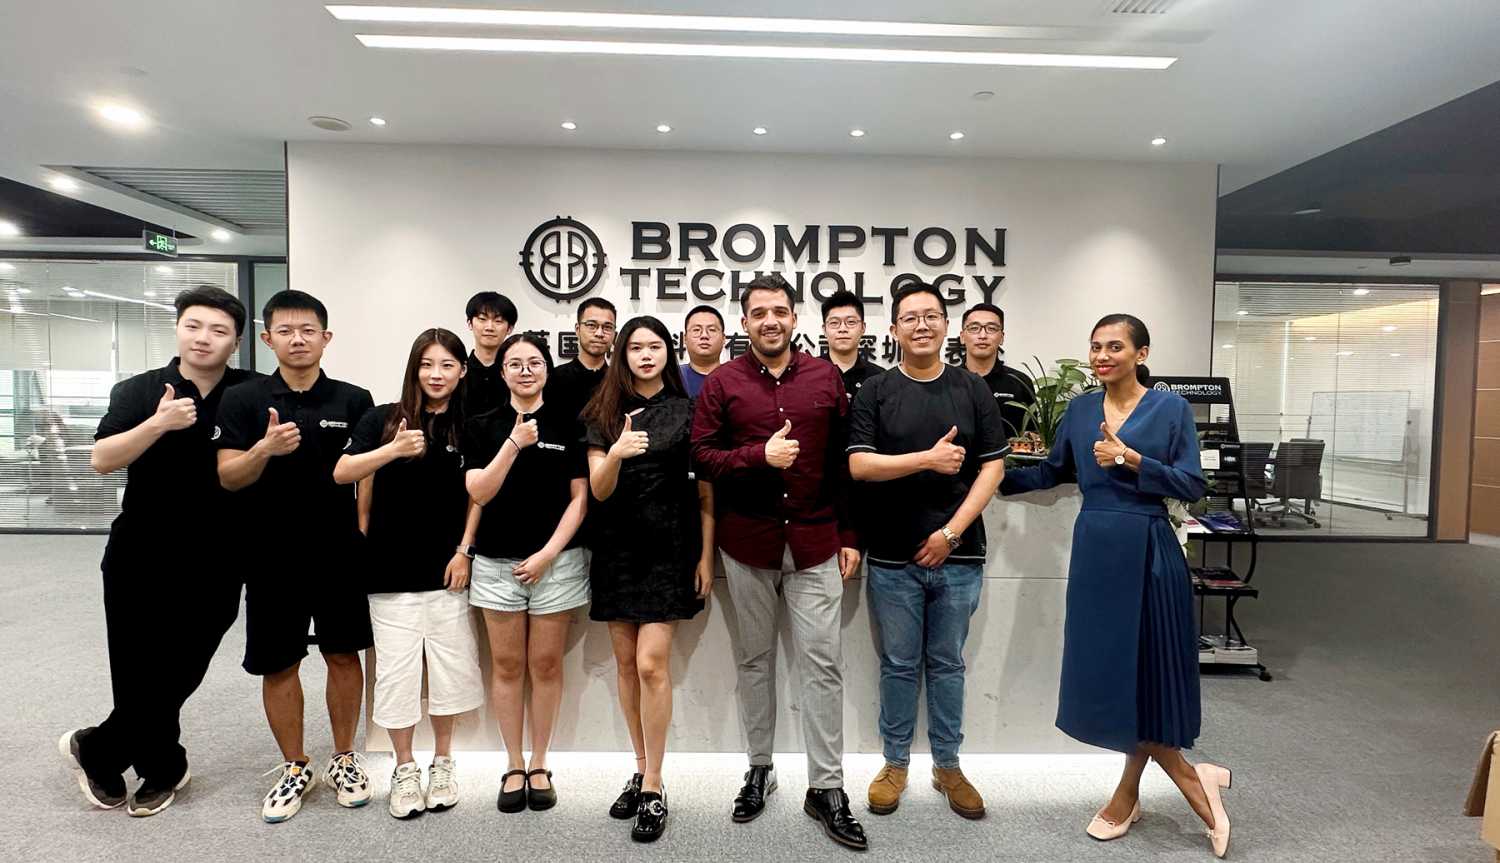 The Brompton Technology Shenzhen team